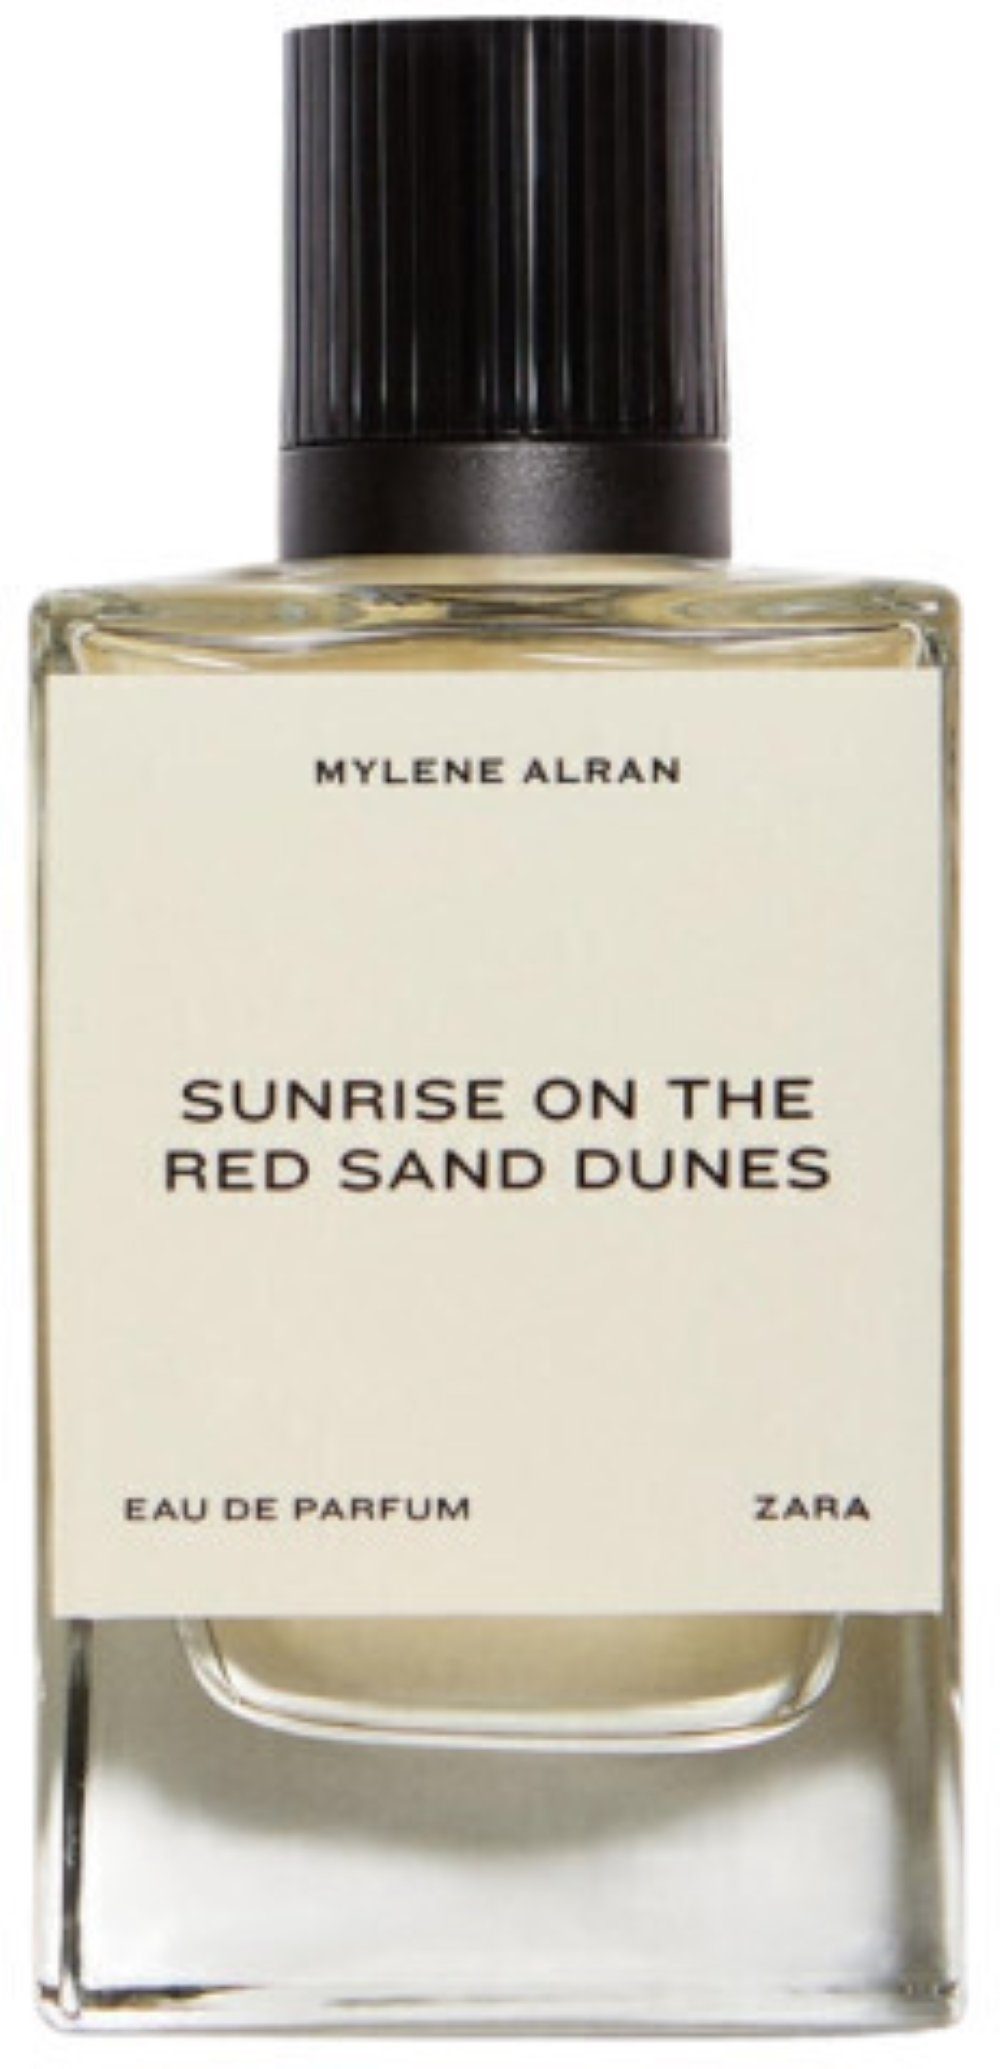 Zara Eau de Parfum Sunrise On The Red Sand Dunes